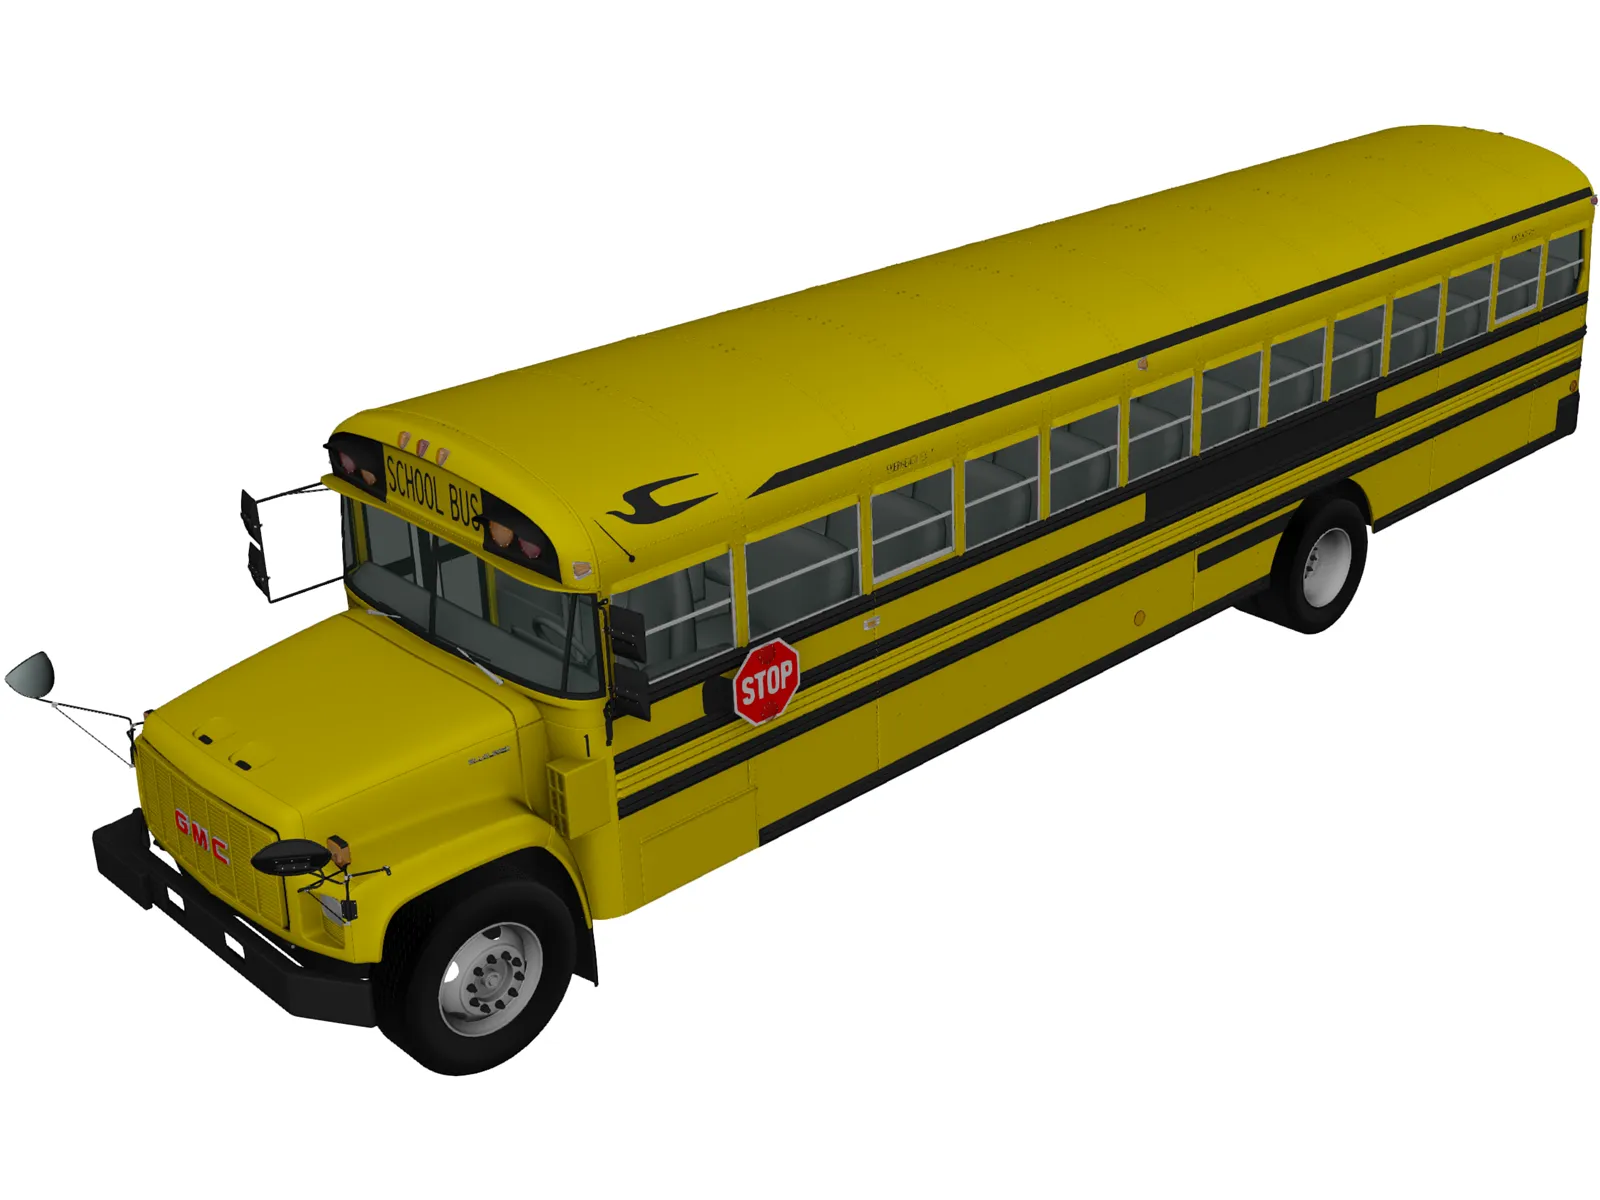 GMC B-Series School Bus (2000) 3D Model